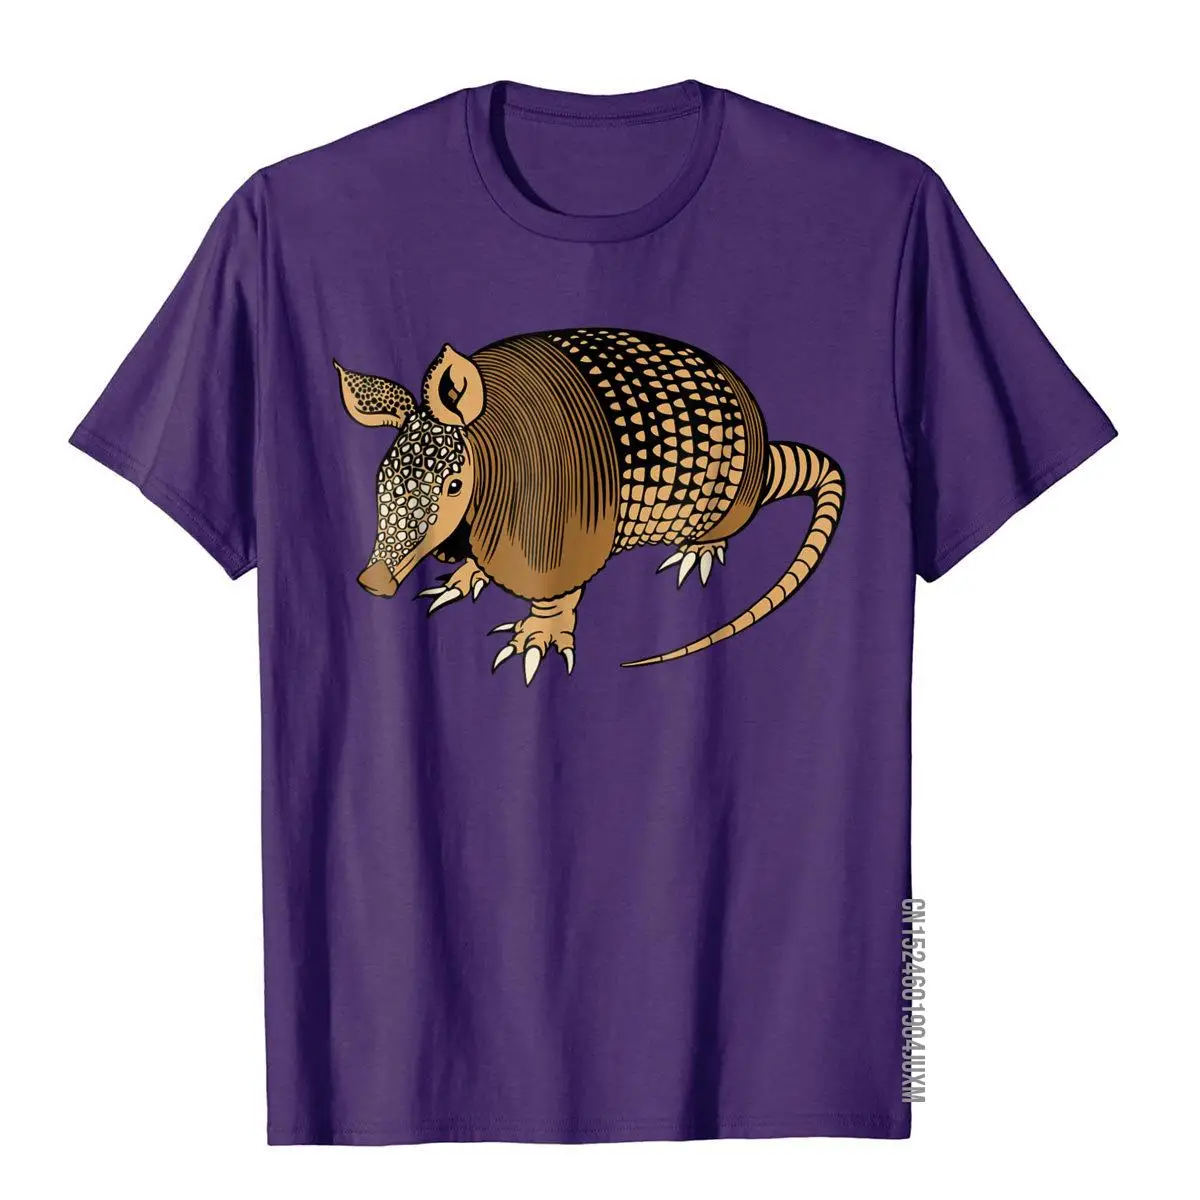 Graphic Tee Animal Armadillo T-shirt Gift__97A2329purple